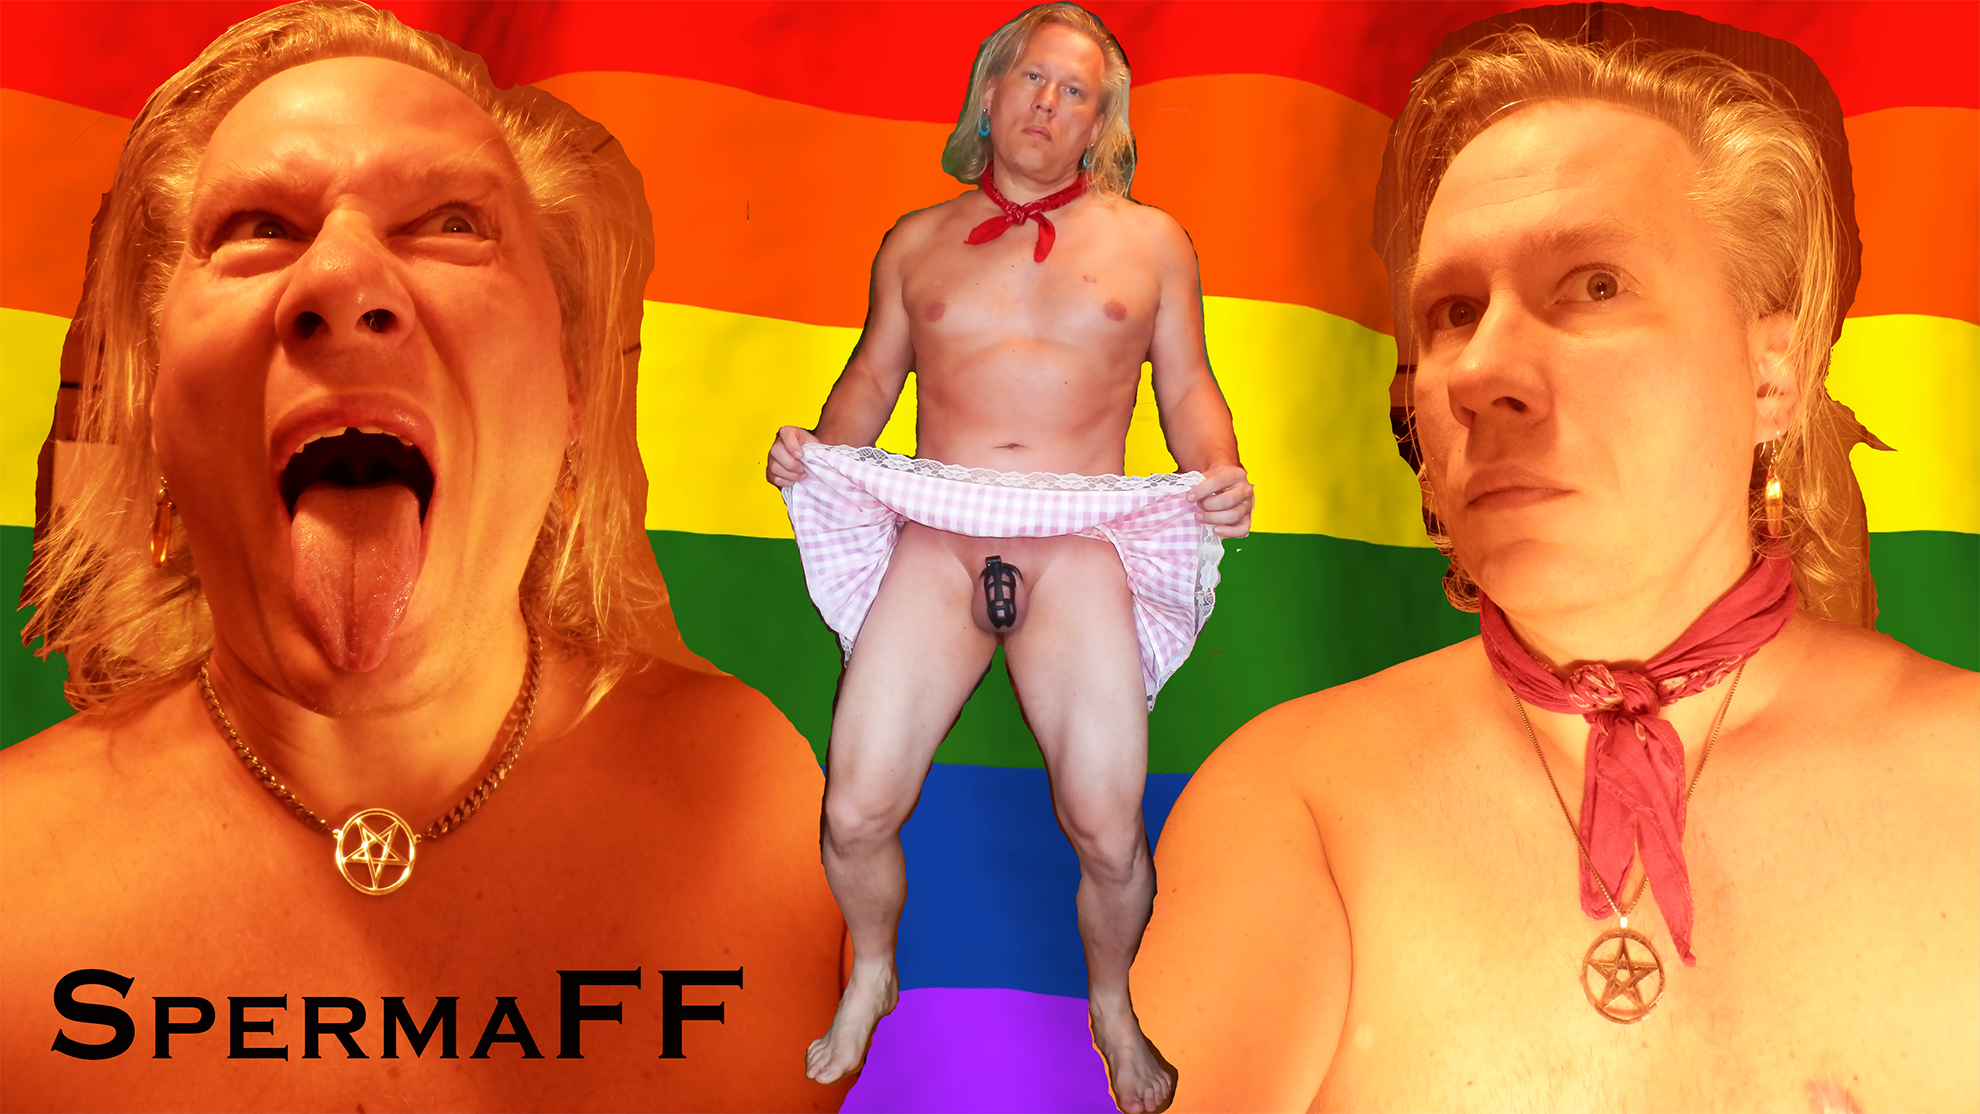 Bareback gay fisting gay pigs family sex homemade image